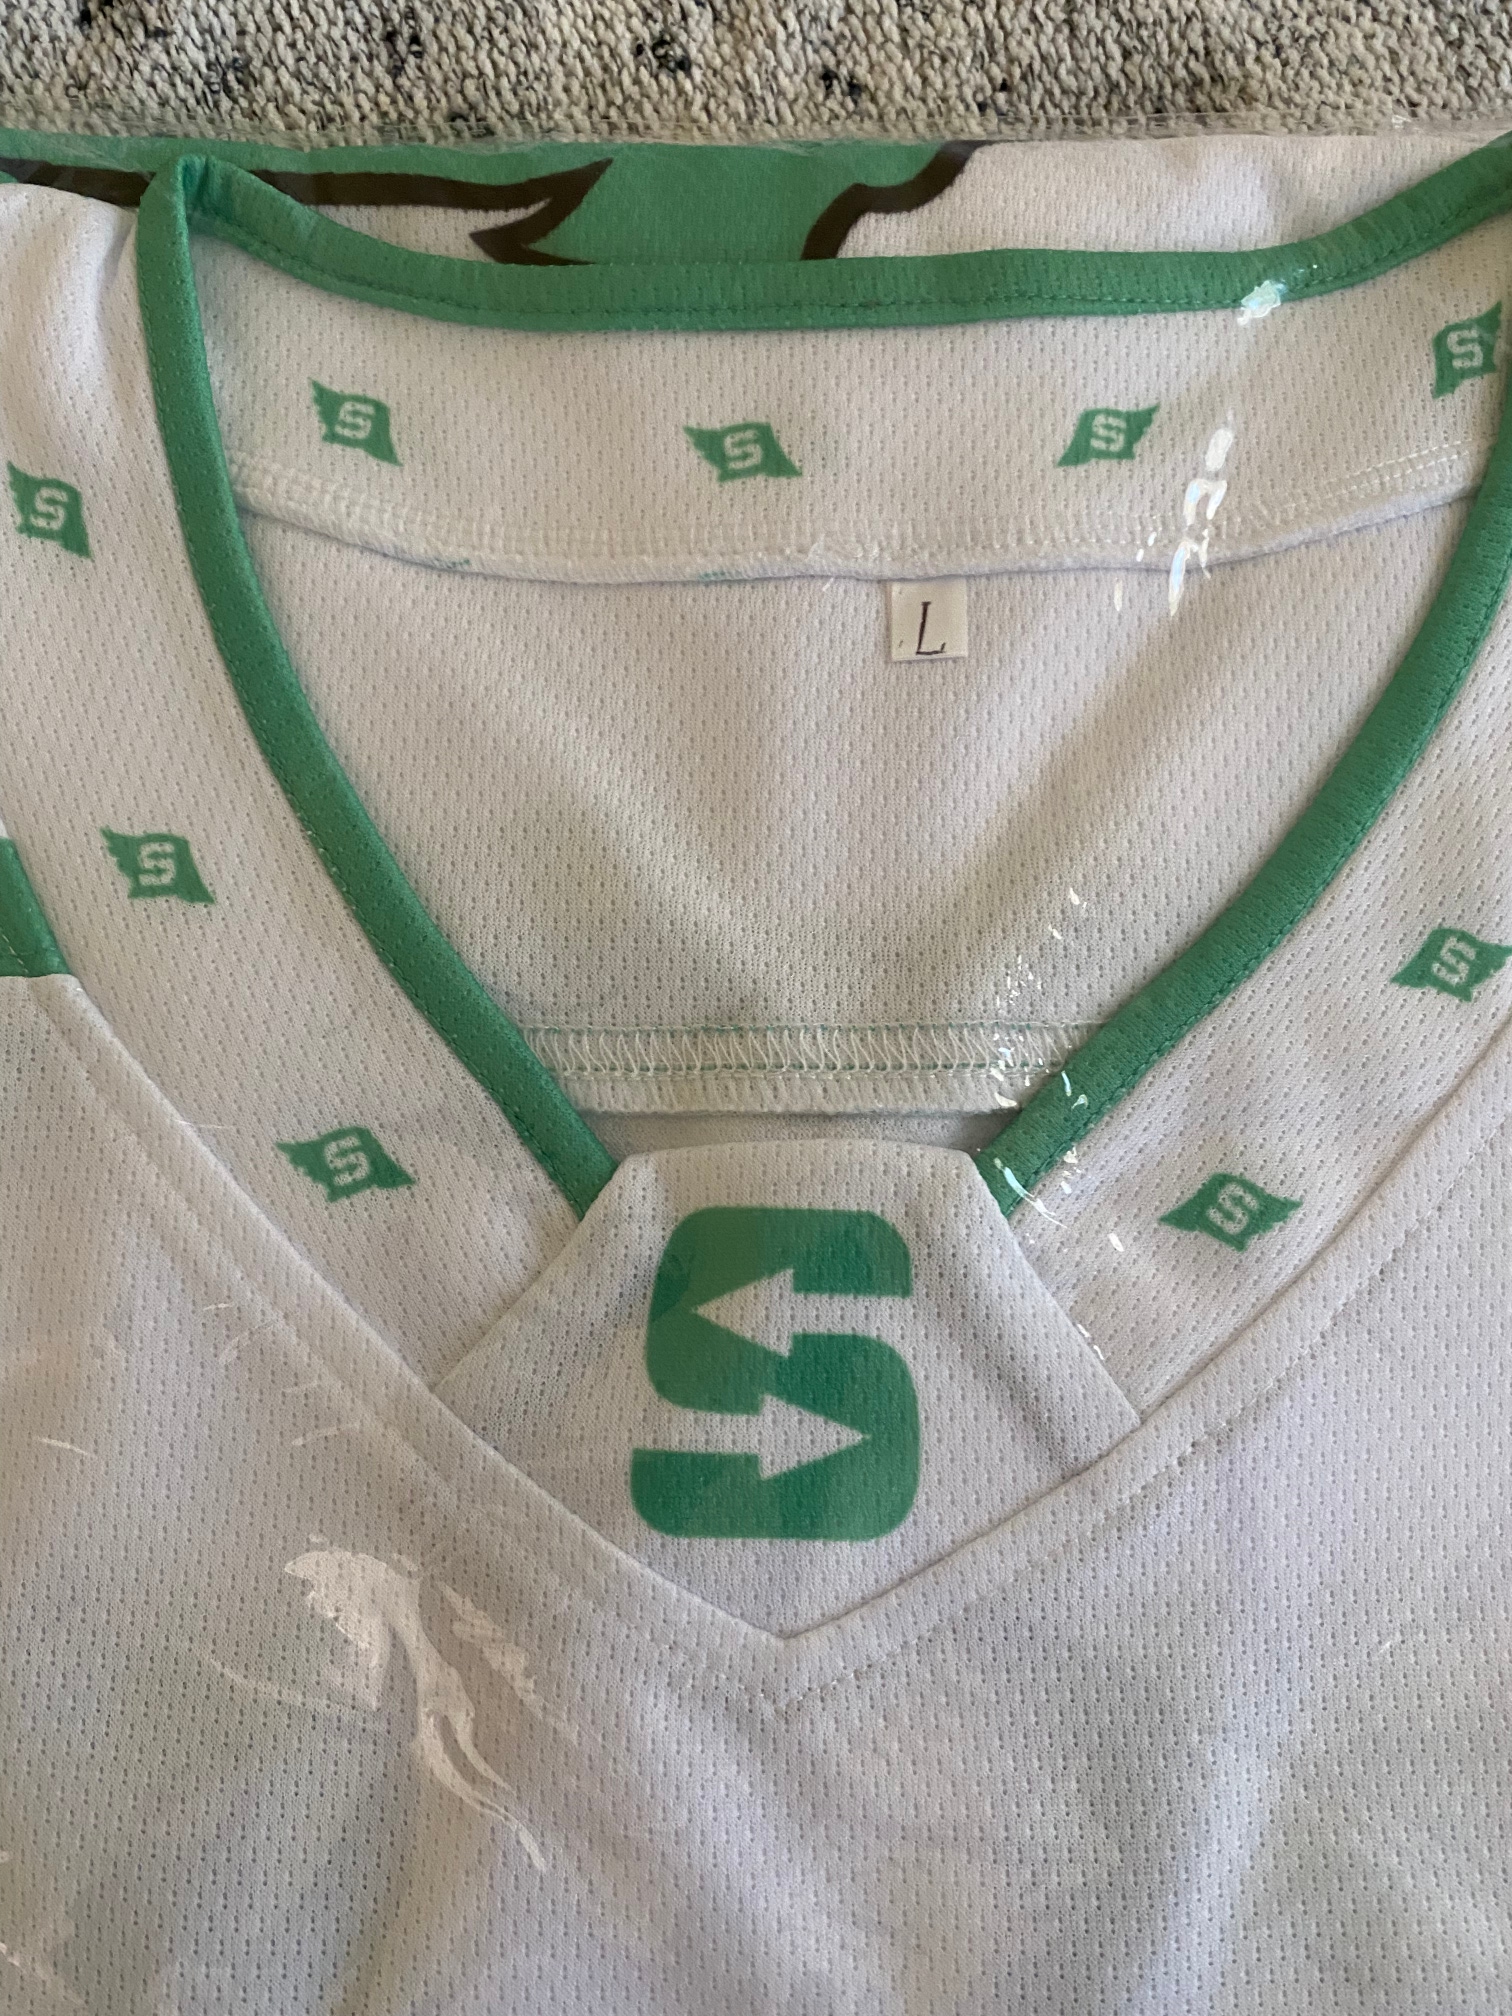 #51 Sidelineswap Jersey *updated collar*